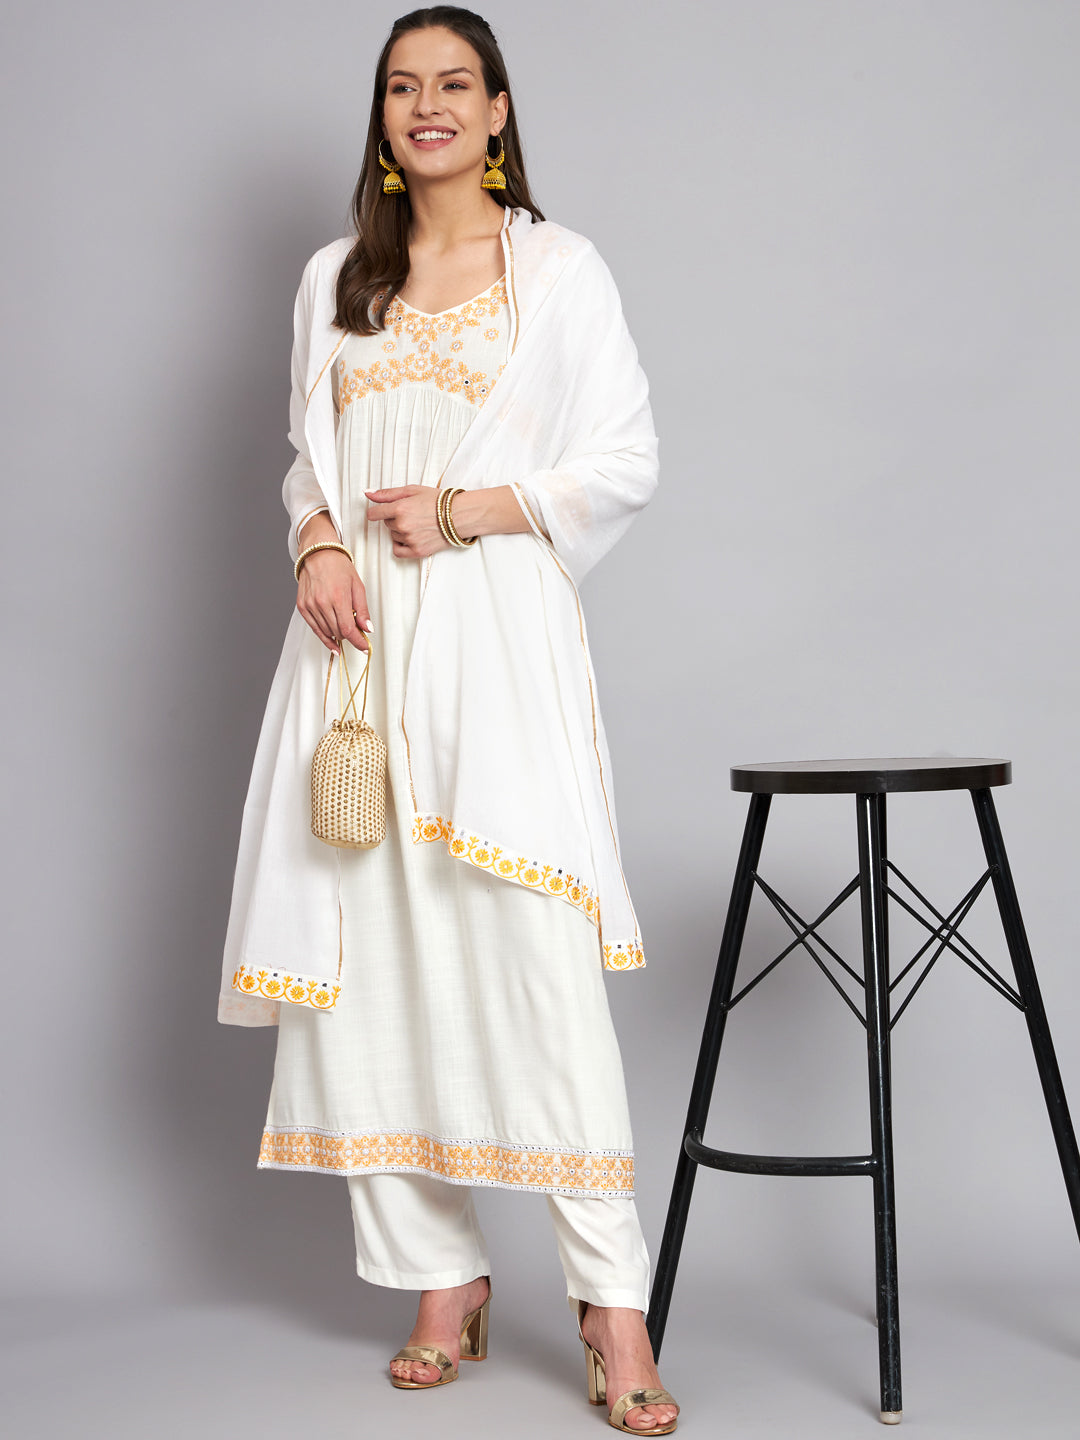 Buy Sritika Women White Solid A Line Kurta Online at 50% off. |Paytm Mall